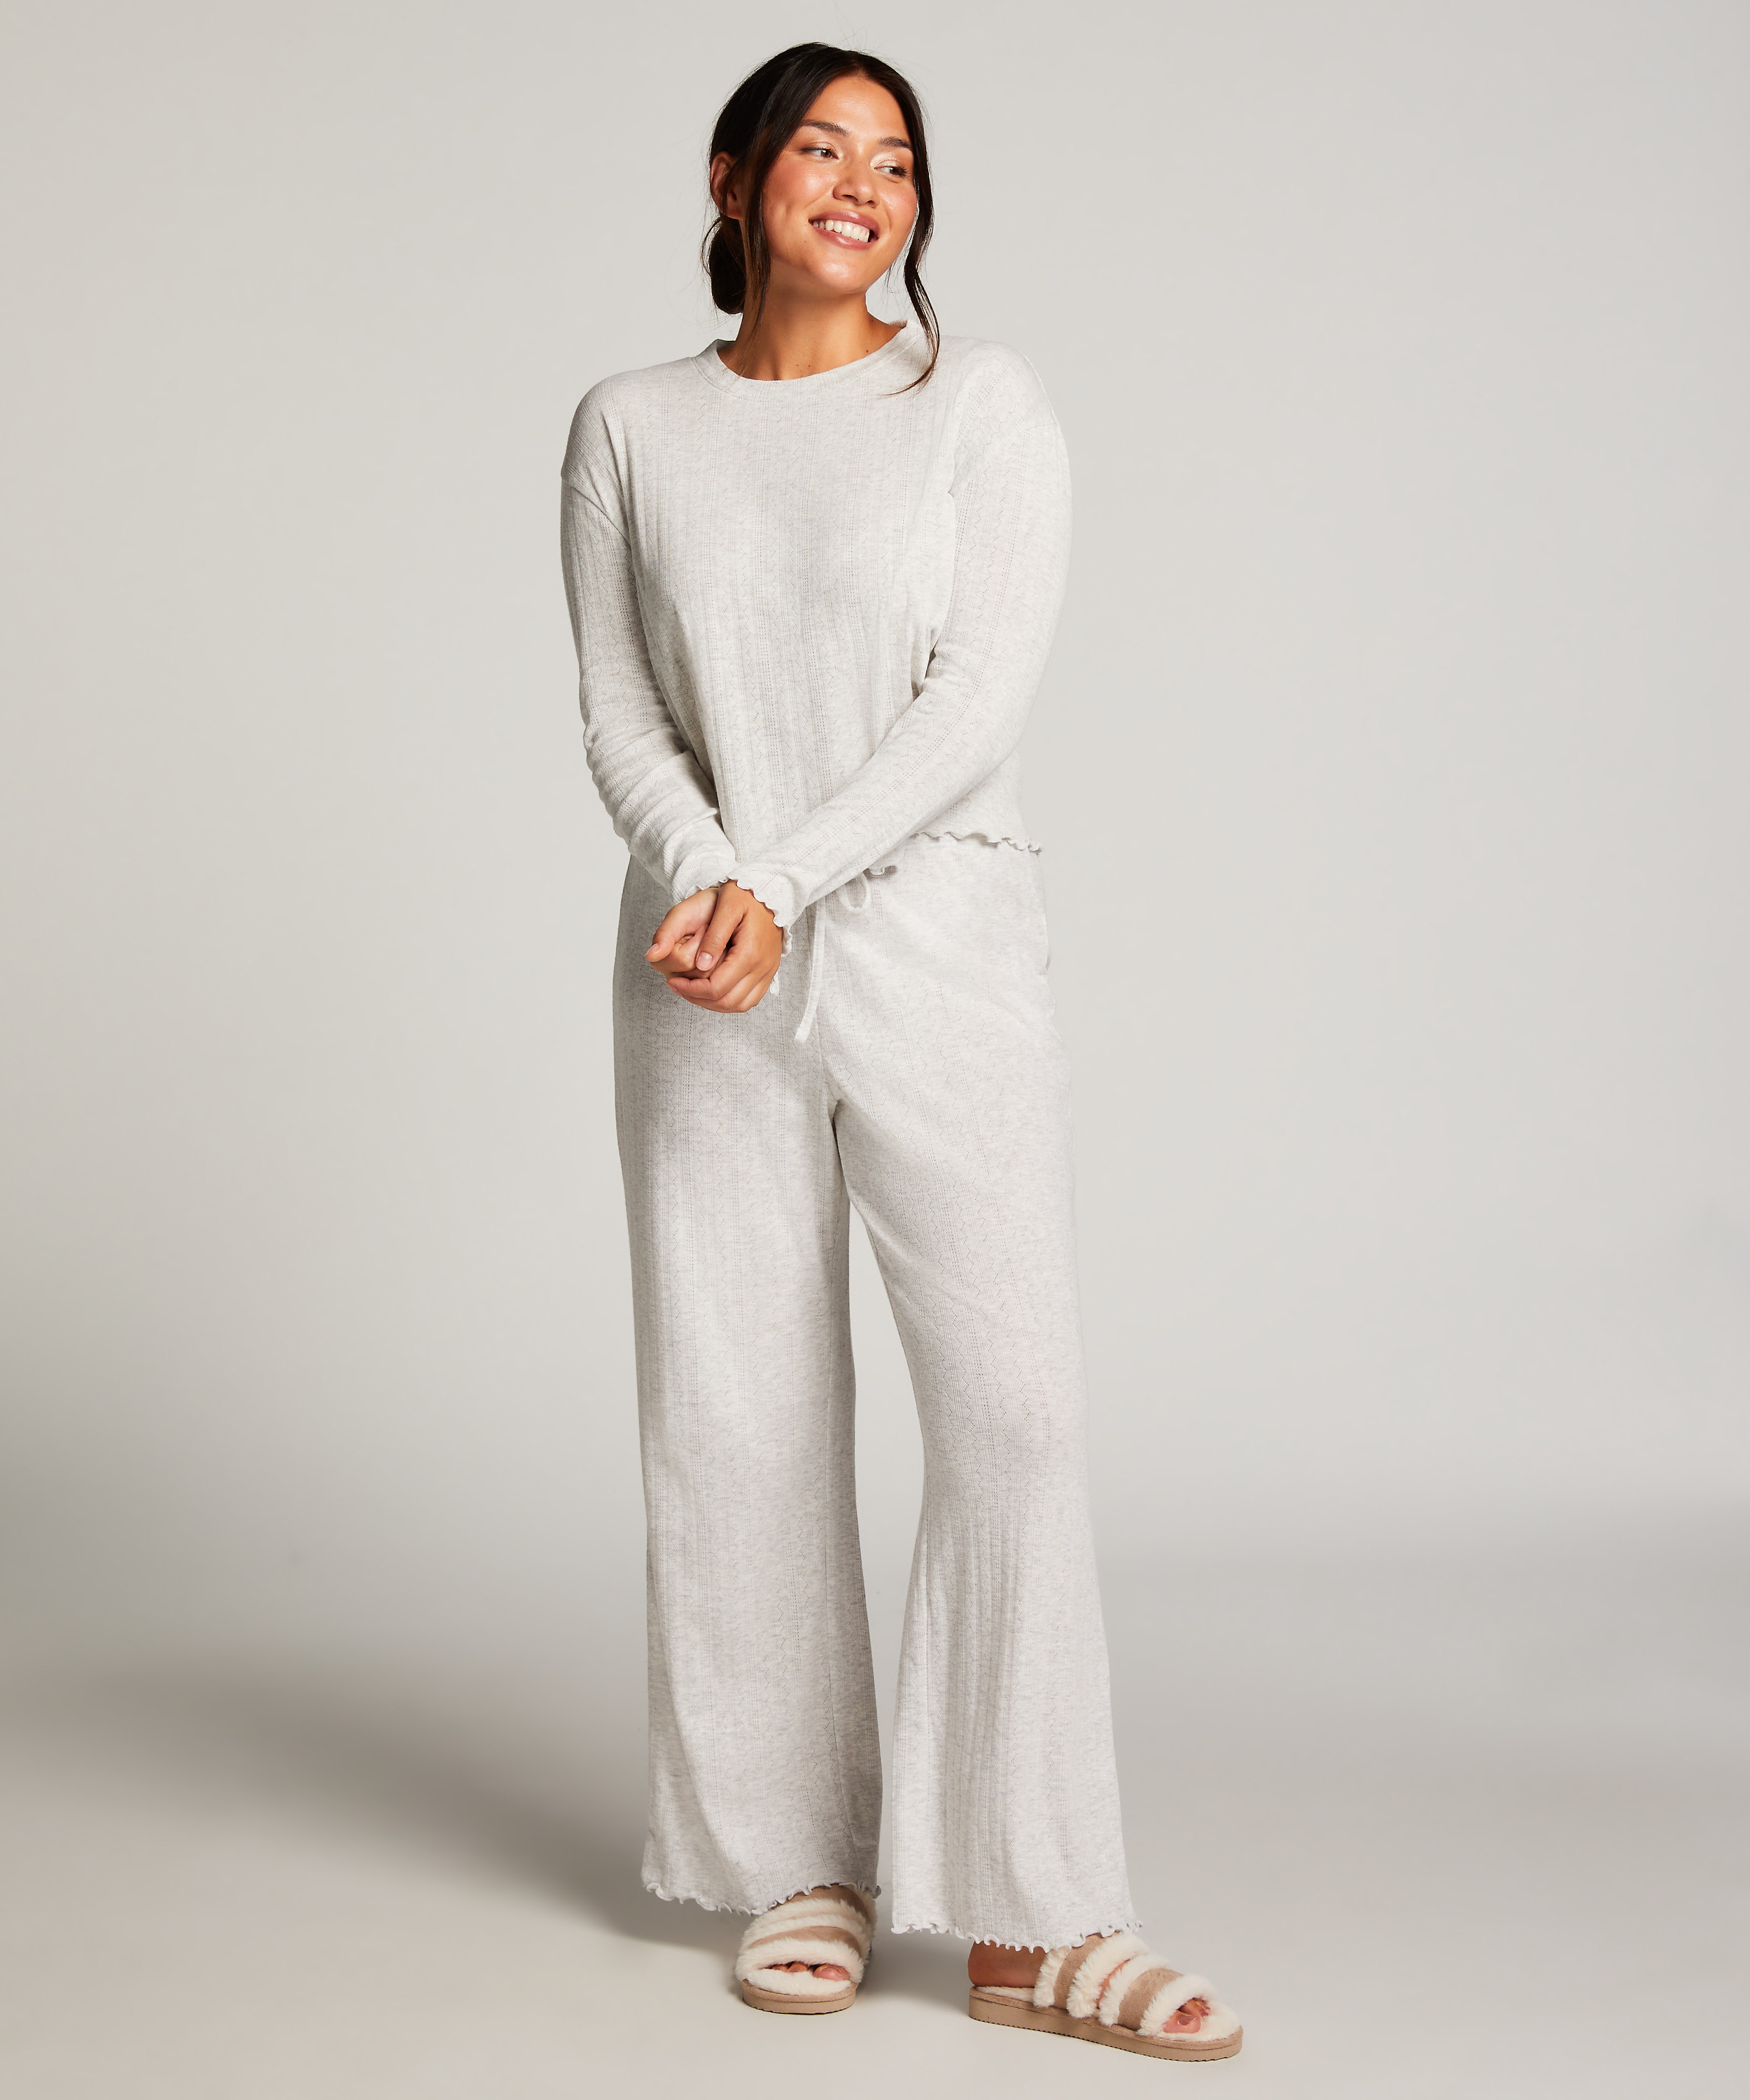 Pointelle Long-Sleeved Pyjama Top, Gray, main